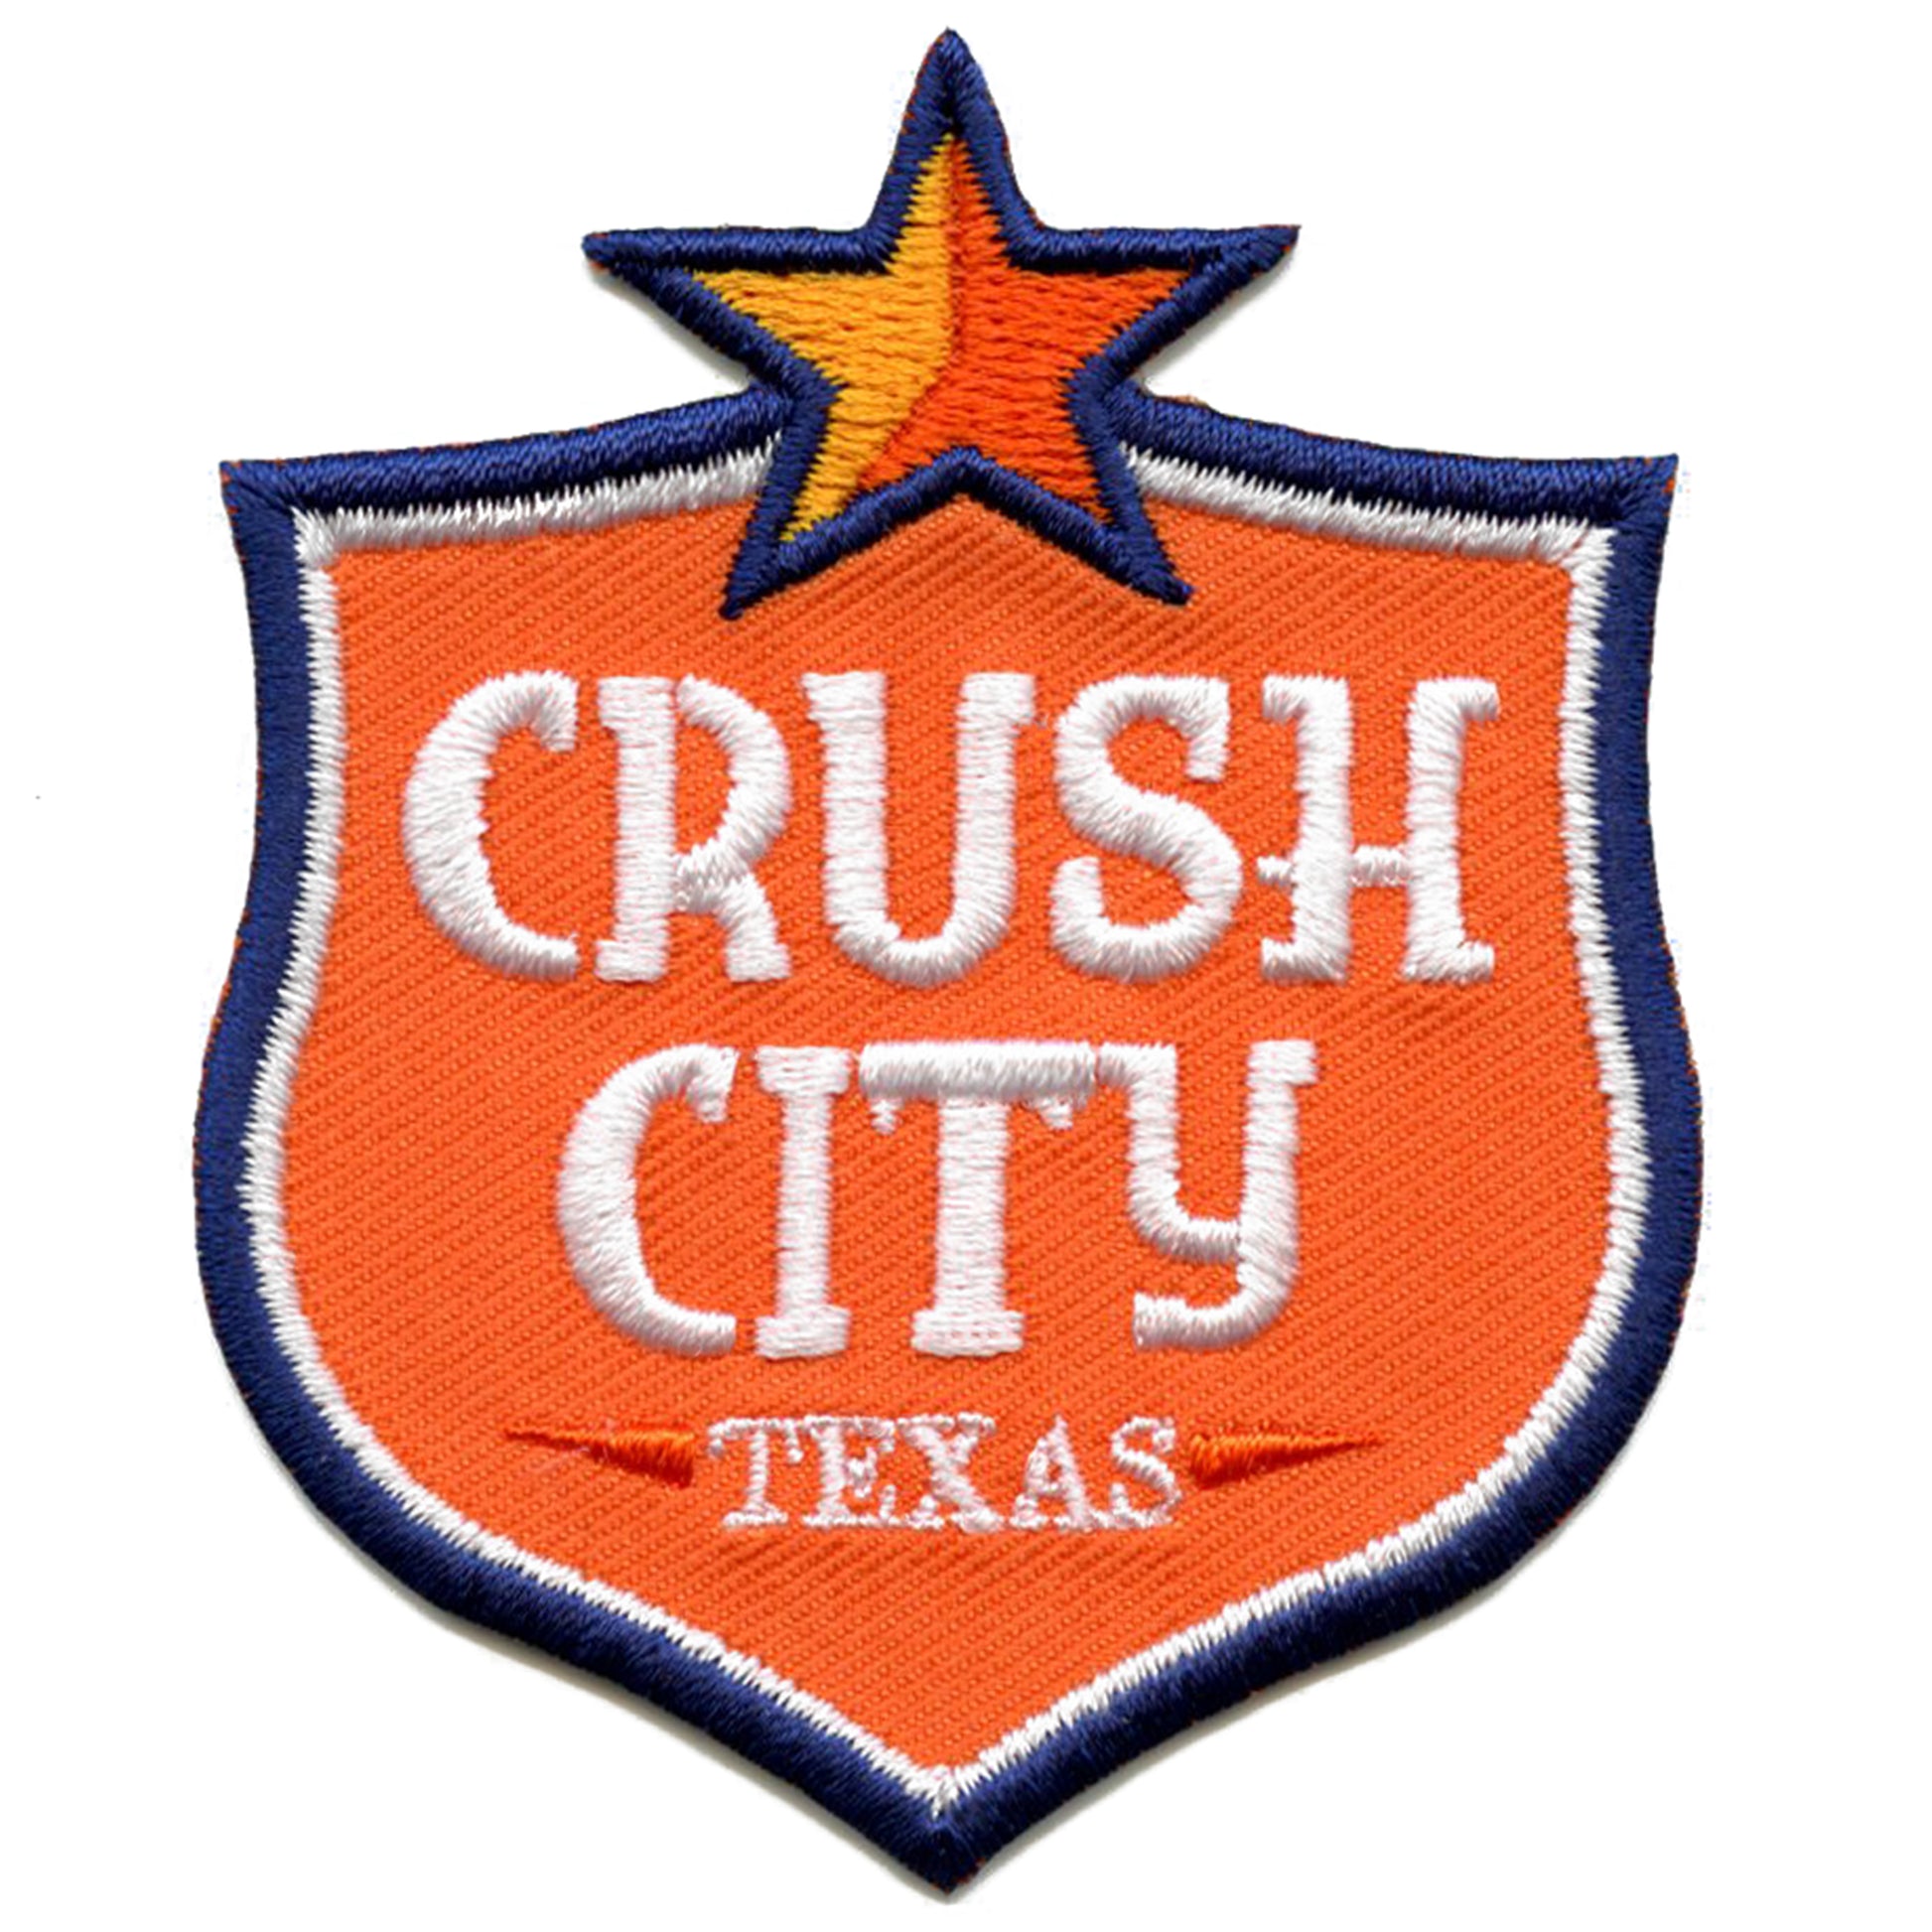 Crush City Houston Shield Patch Texas Parody Logo Embroidered Iron On